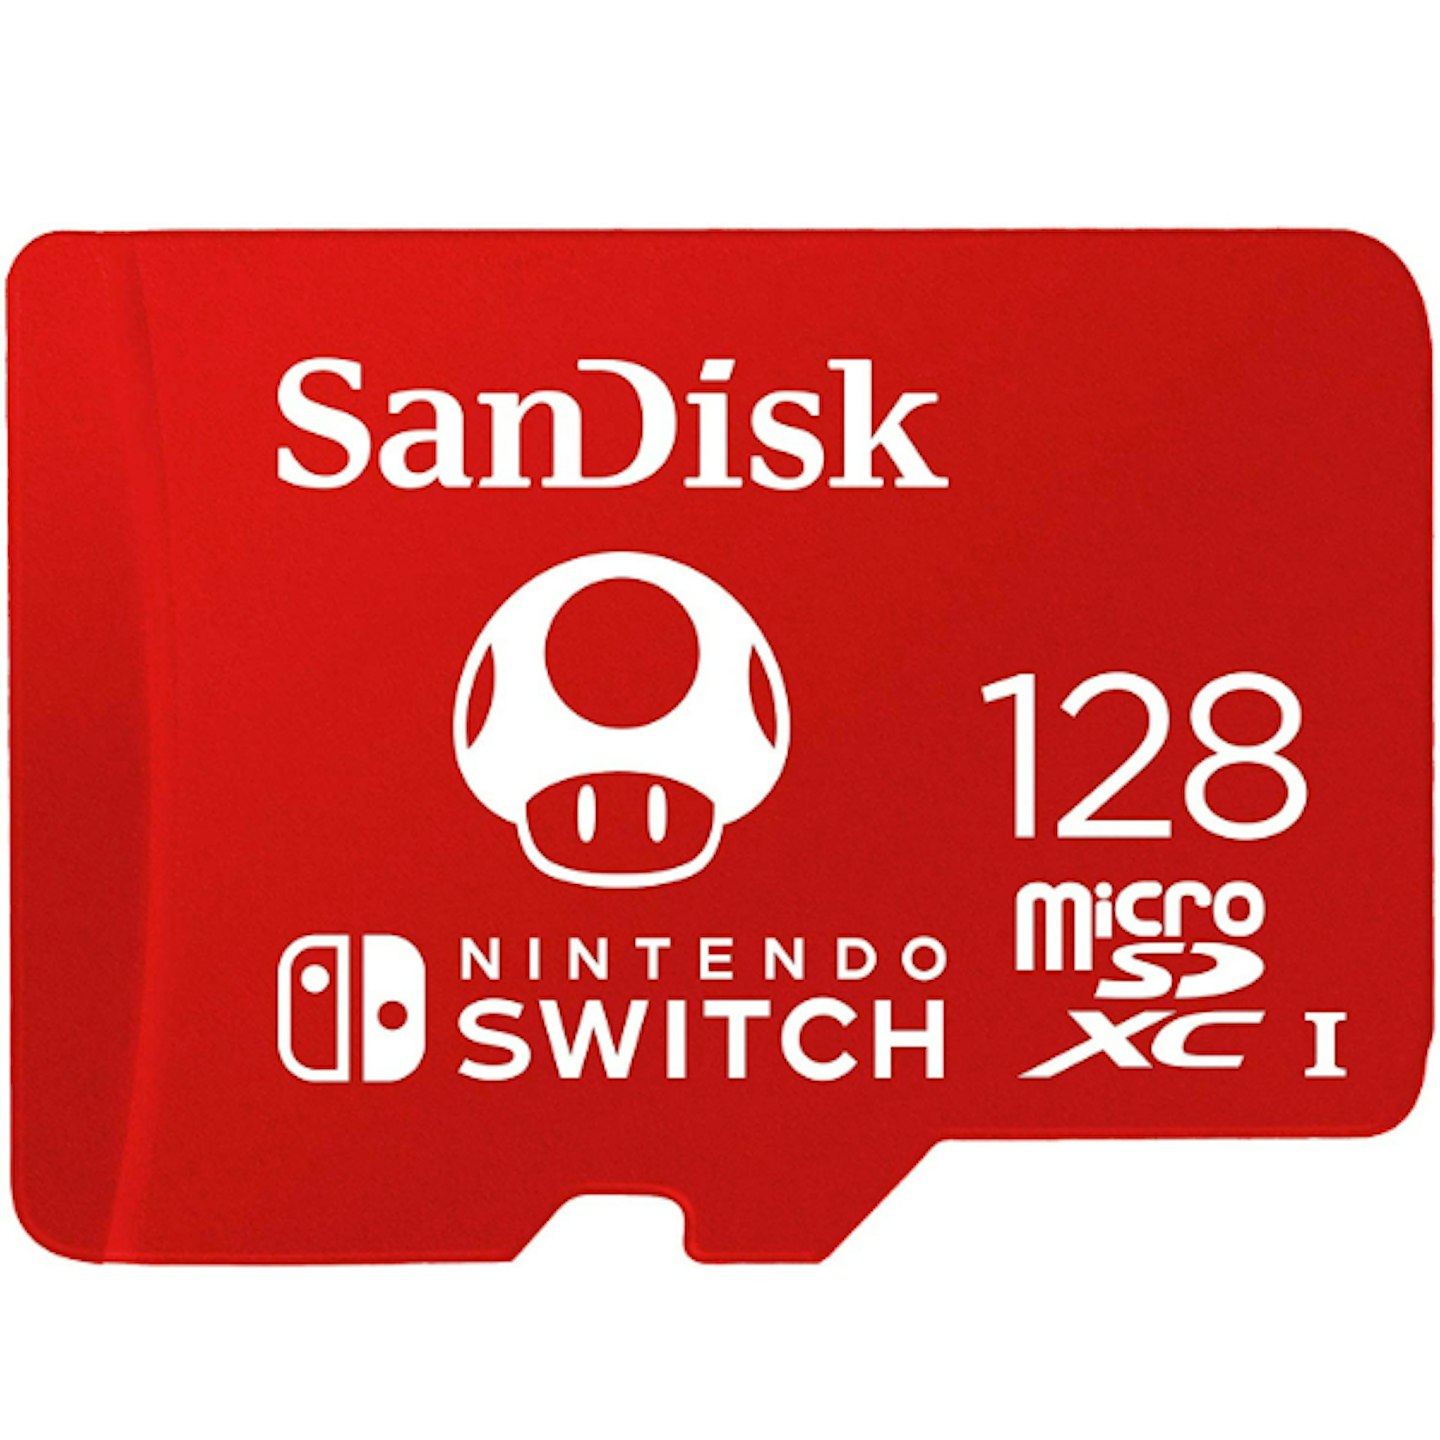 SanDisk Nintendo Switch 128GB Micro Memory Card